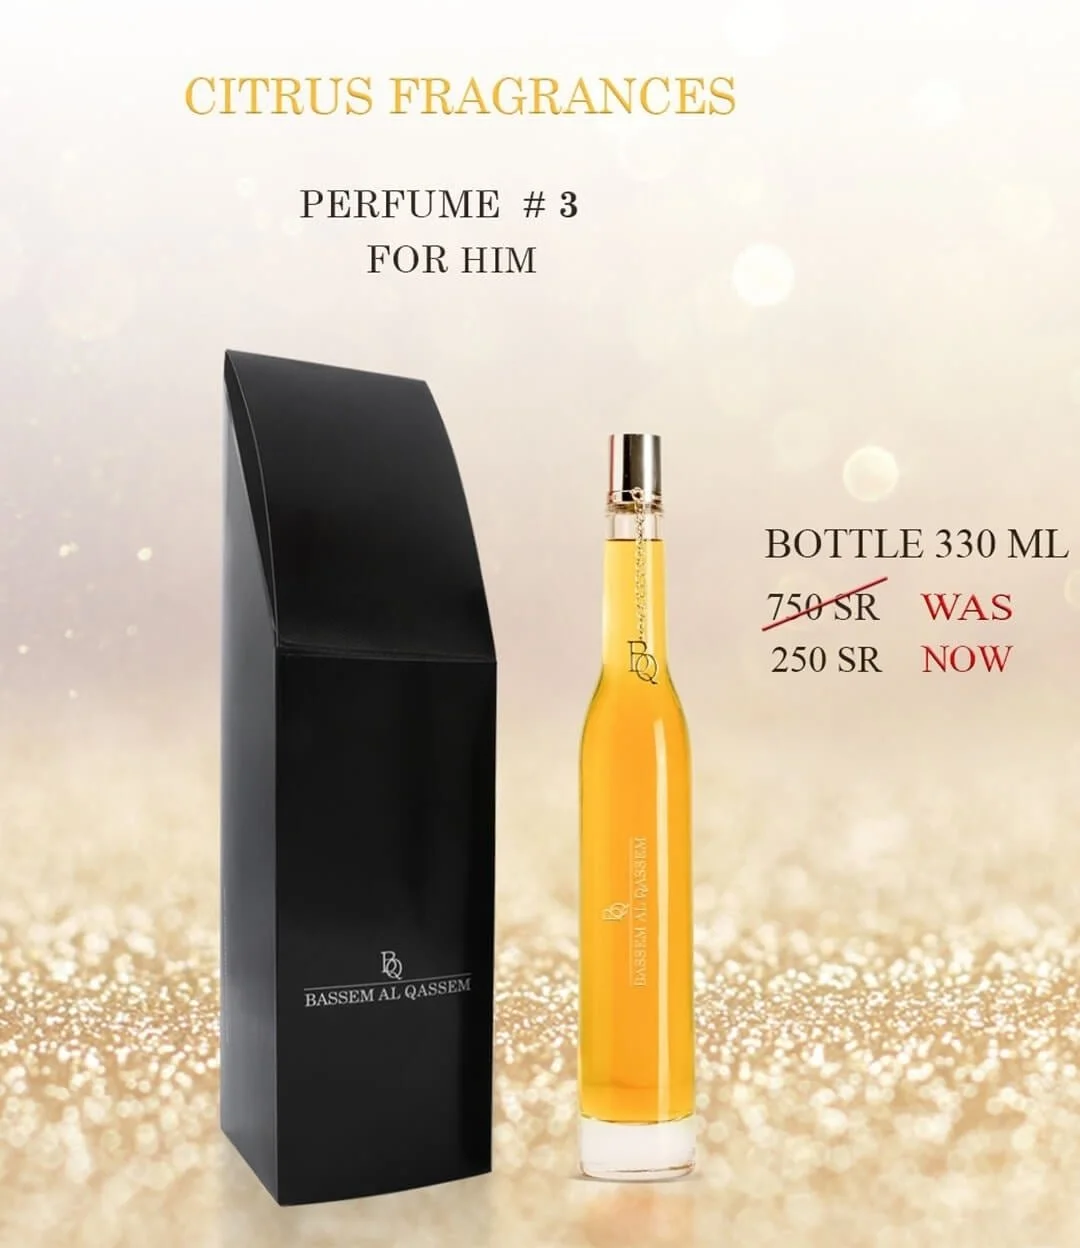 Perfume #3 Citrus Fragrance for Him by Bassem Al Qassem 